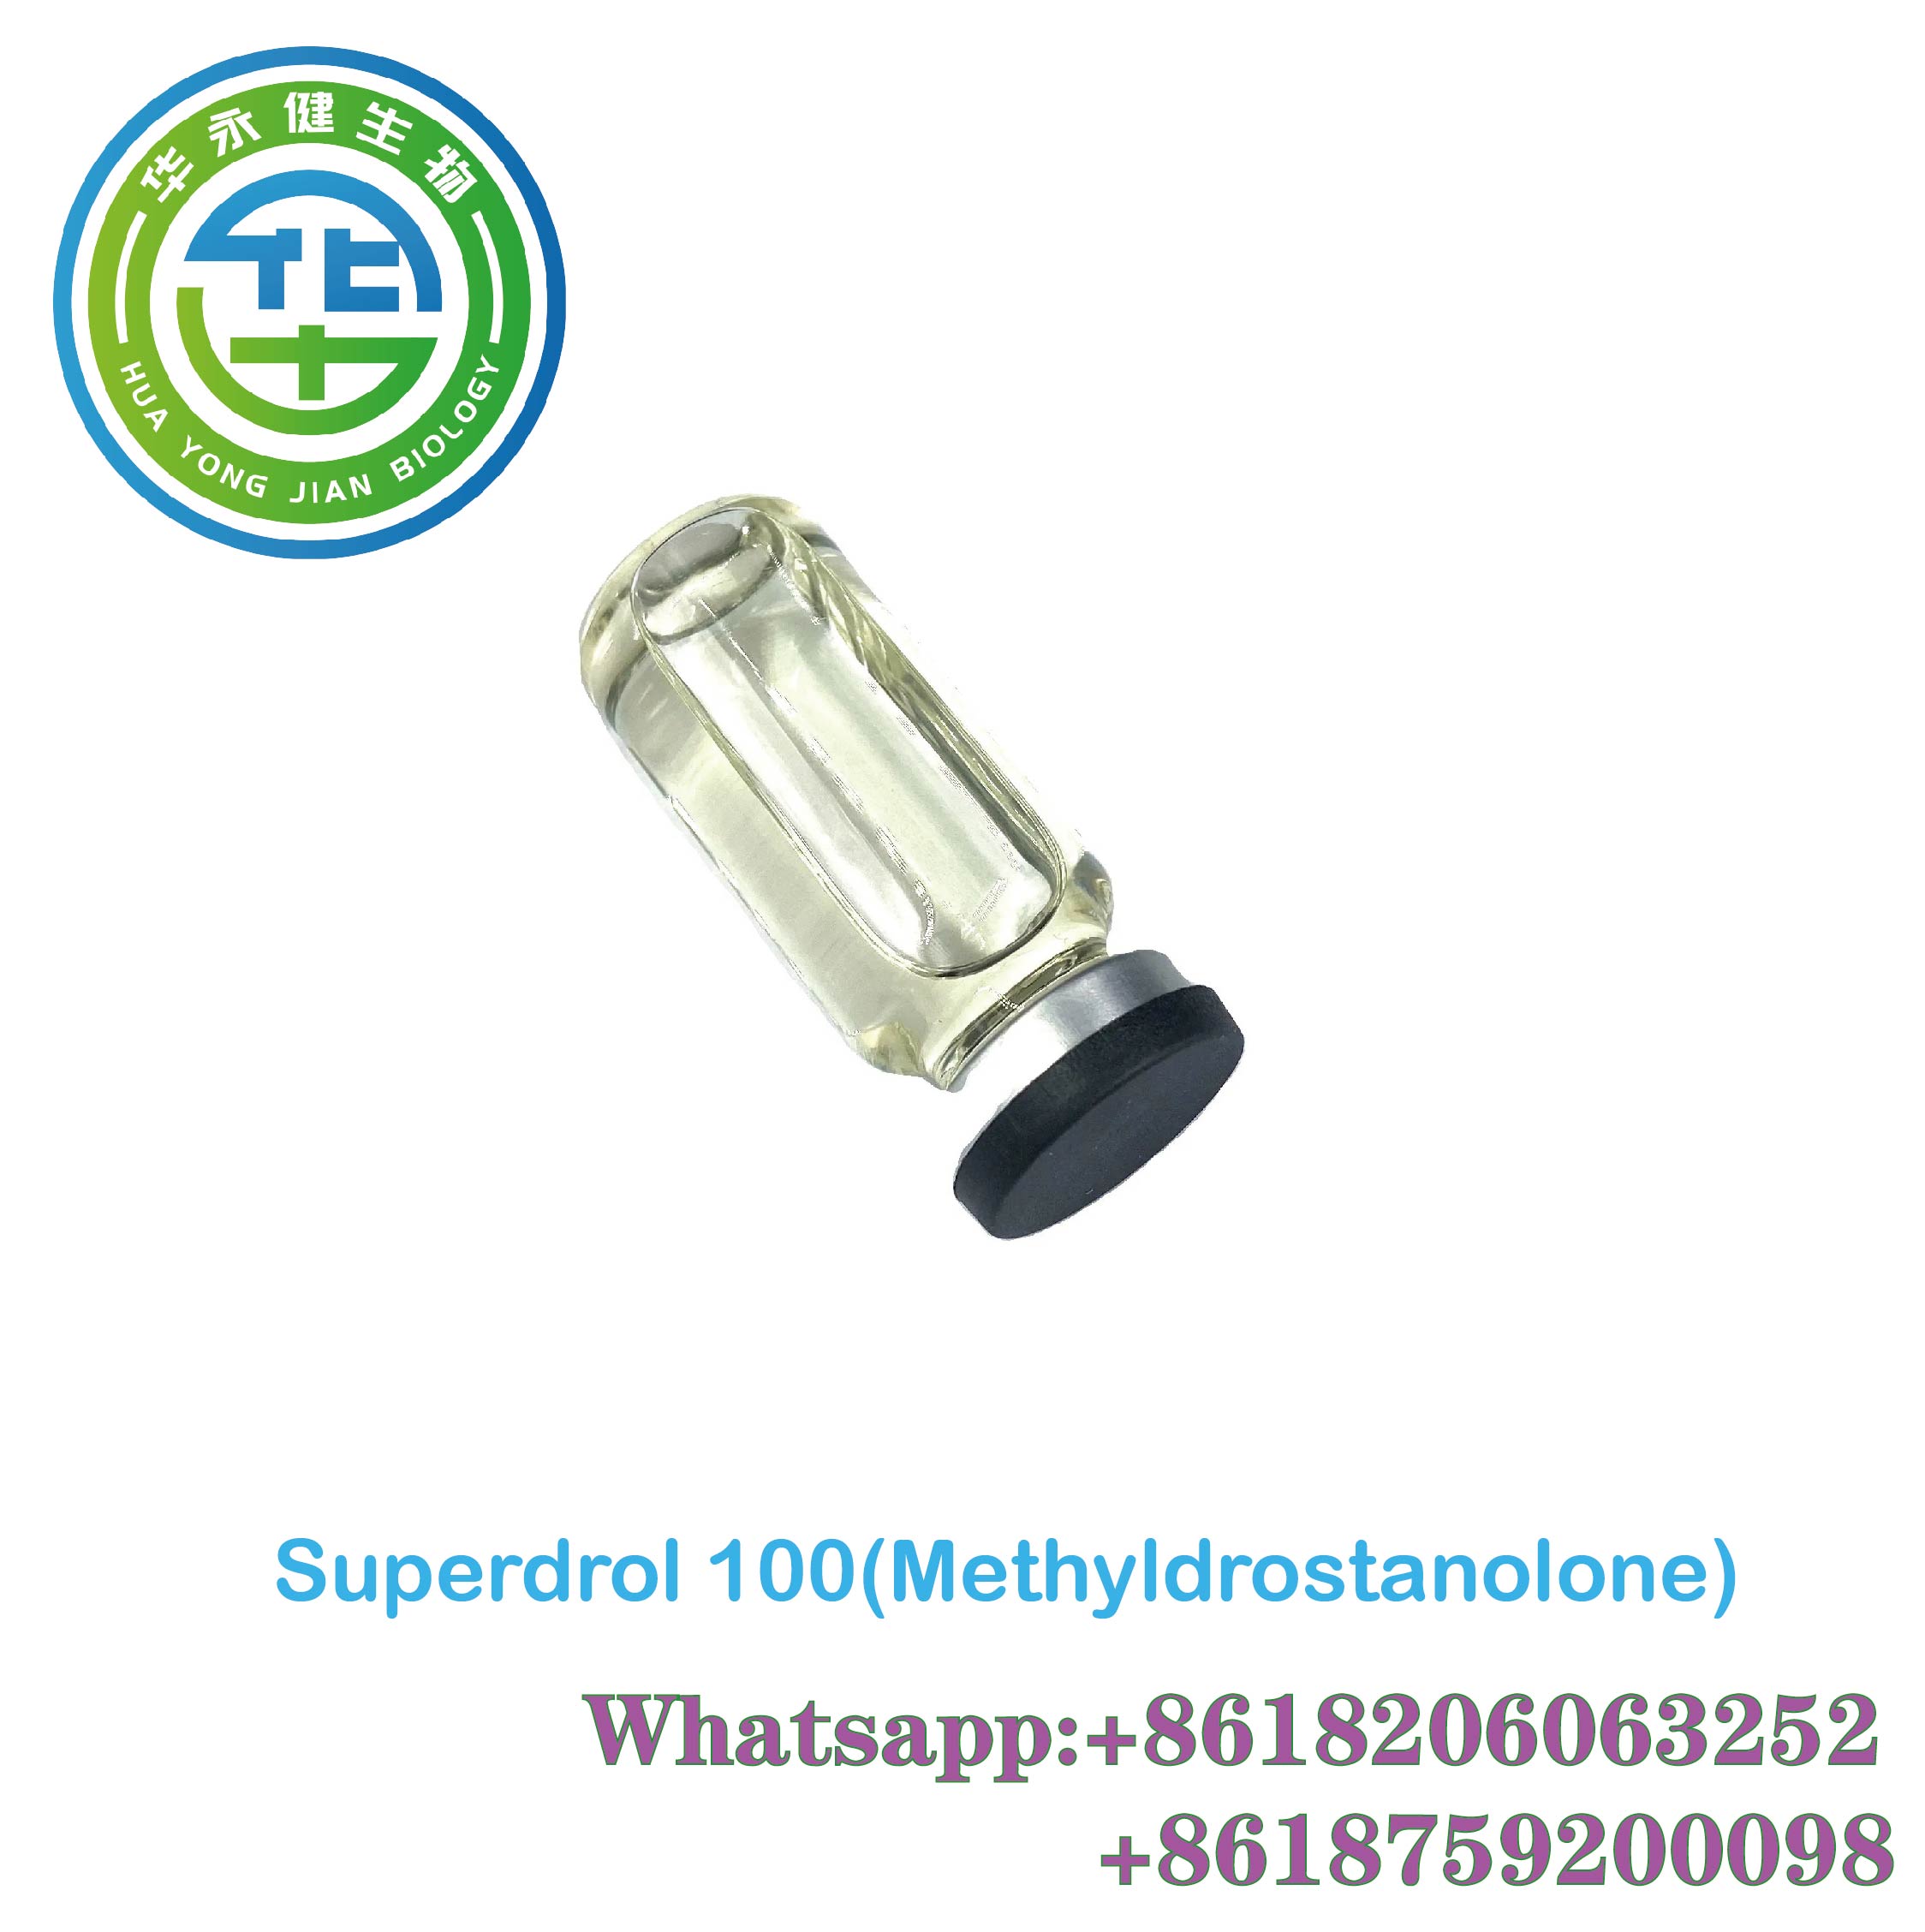 Supply Finsihed Oil Test Powder Superdrol 100 Powder 10ml Mct Oil for Bodybuilding Methyldrostanolone 100mg/ml